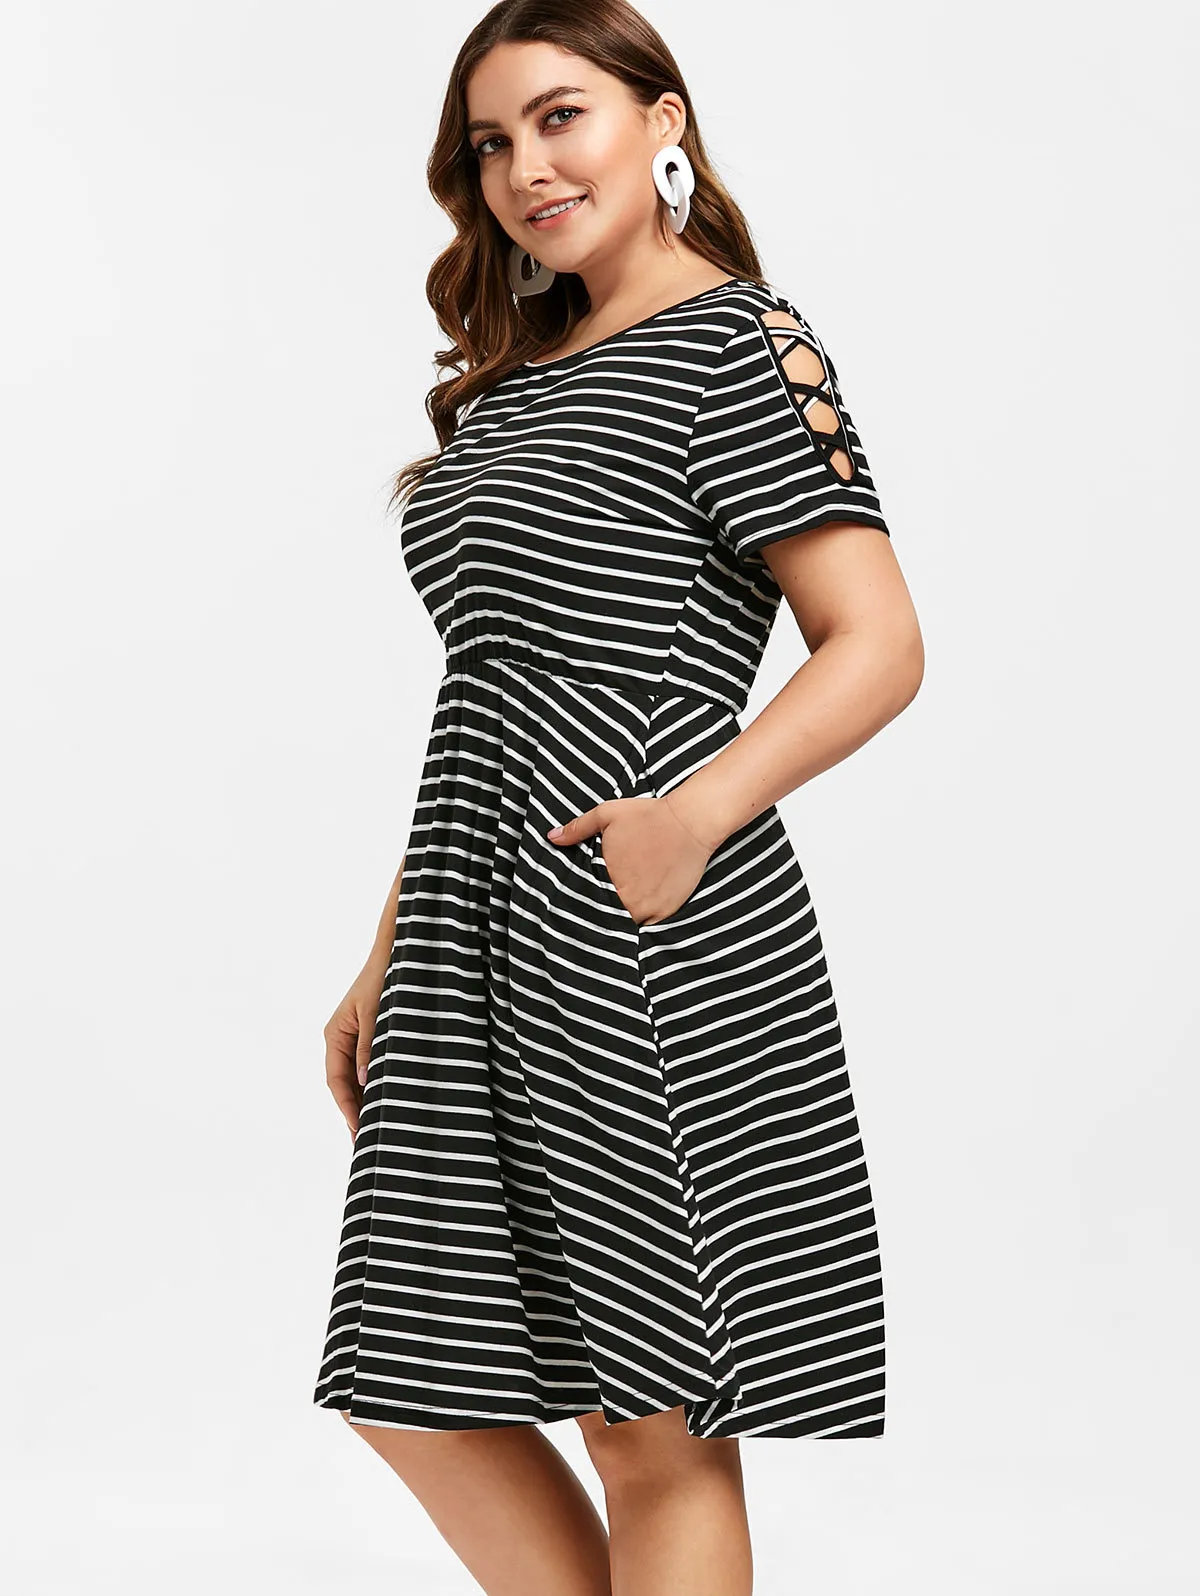 Wipalo Plus Size Striped A Line Dress Criss Sleeve Elastic Waist Dress Summer Casual Work Dresses Women Dress Vestidos Y2001201936157